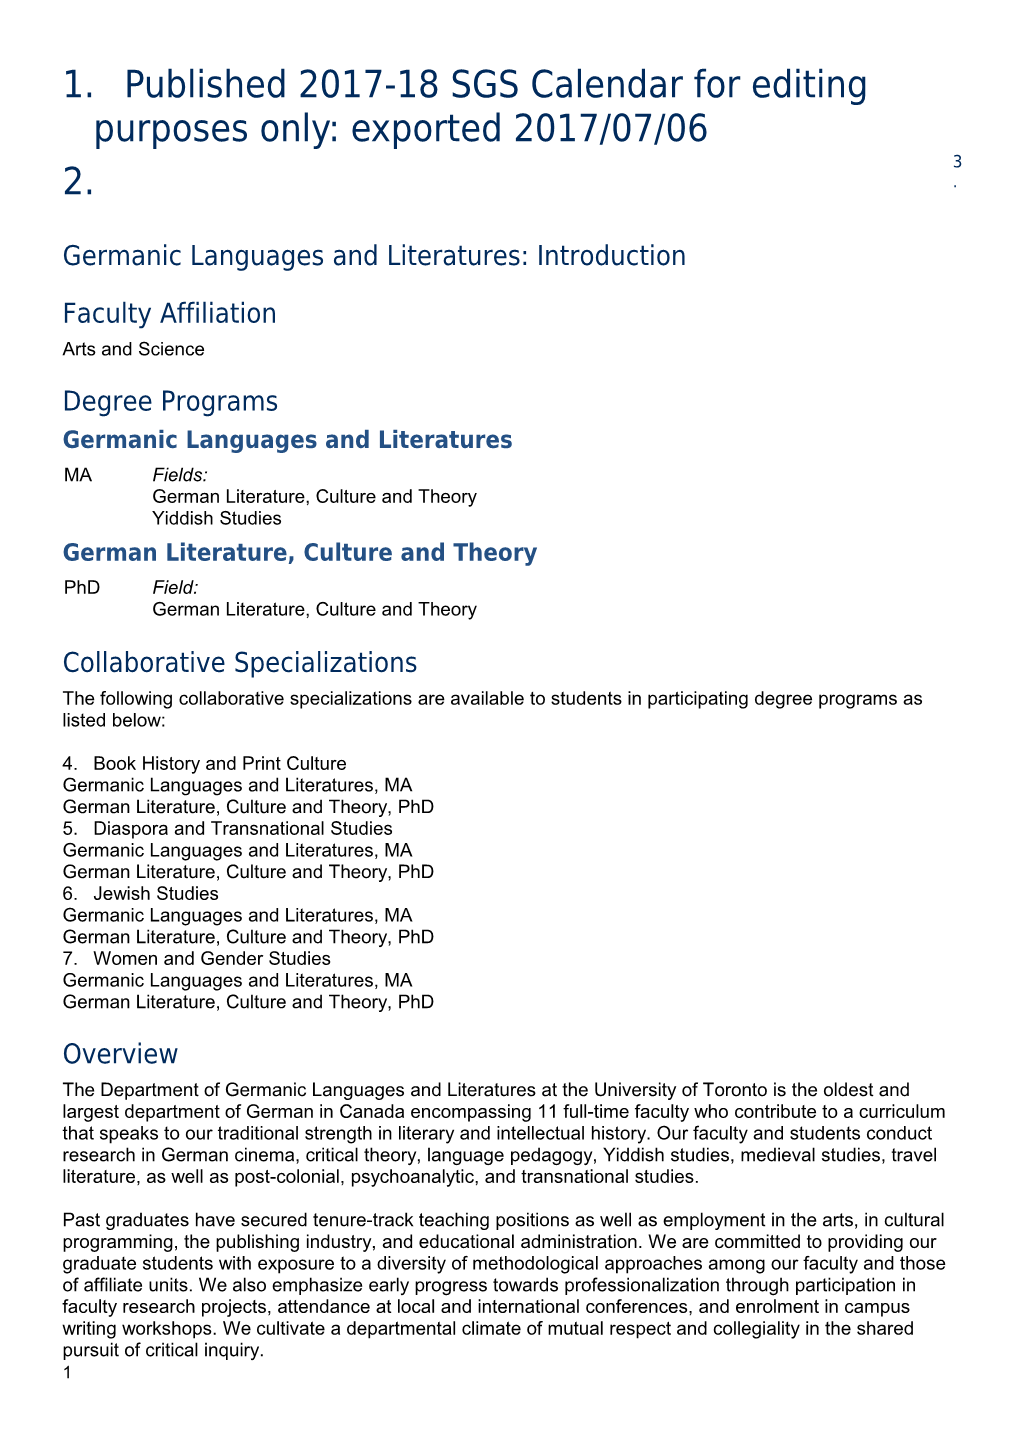 Germanic Languages and Literatures